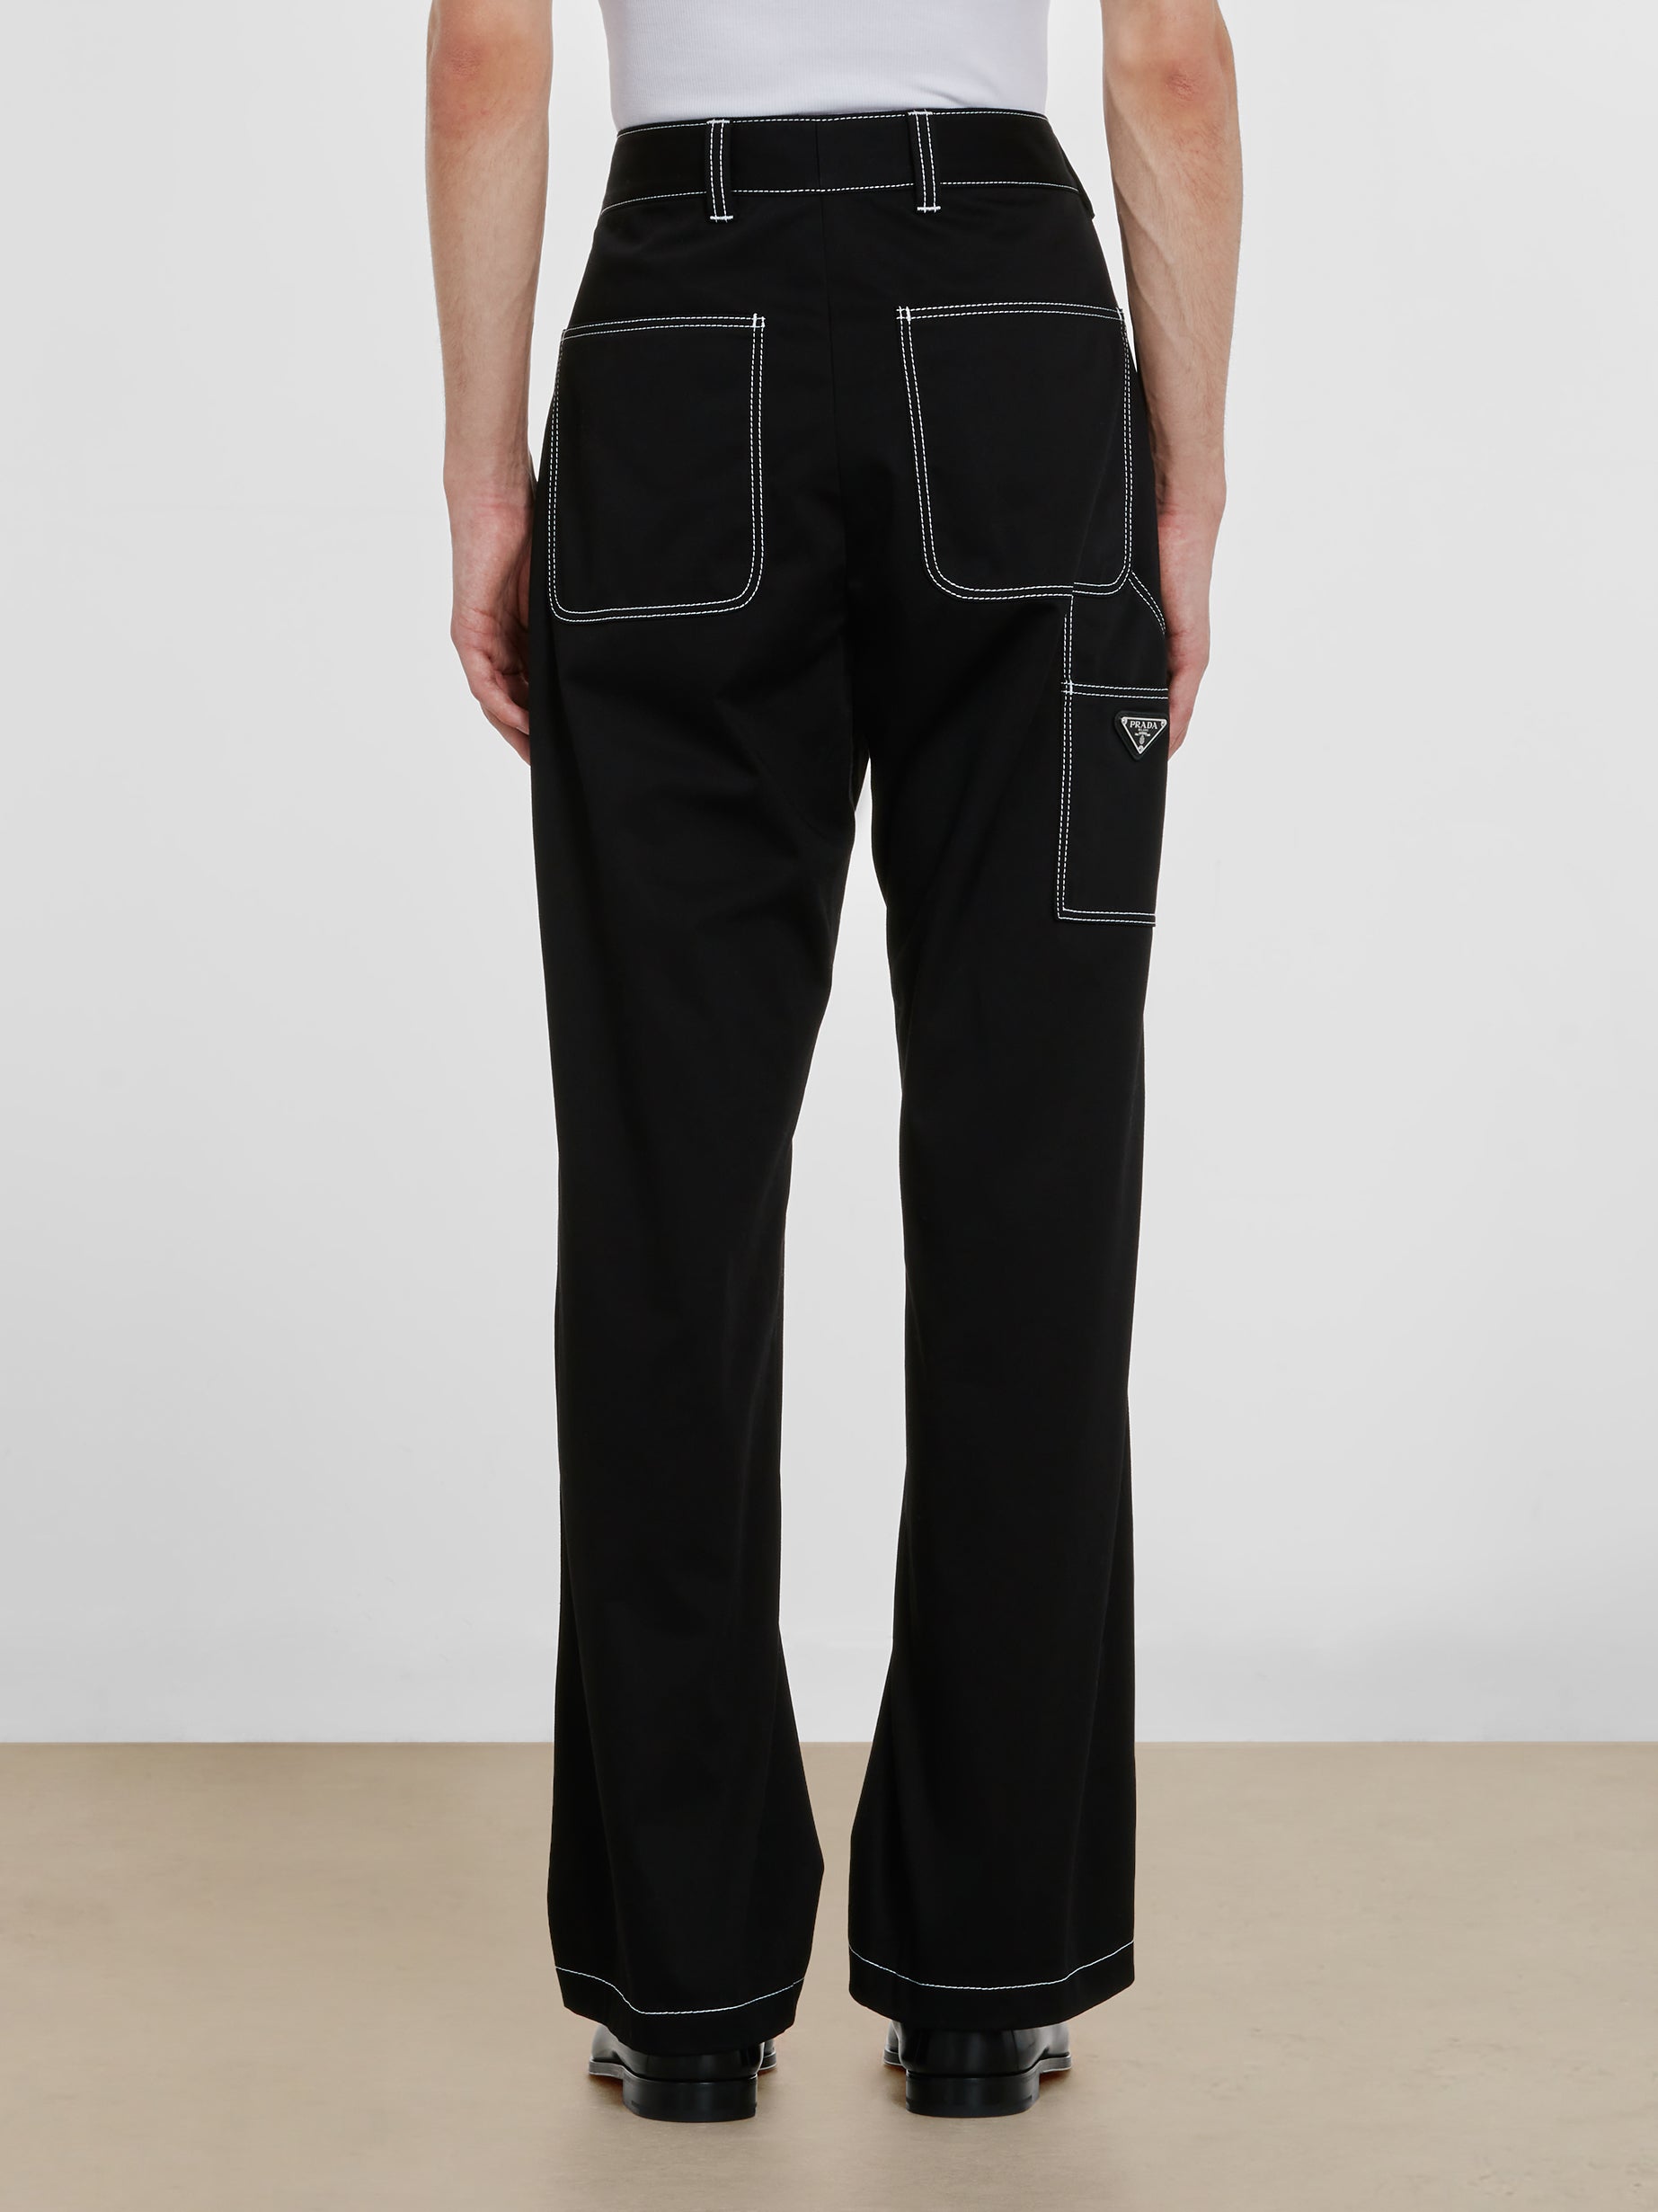 Prada - Men’s Contrast Stitch Trousers - (Black) view 3